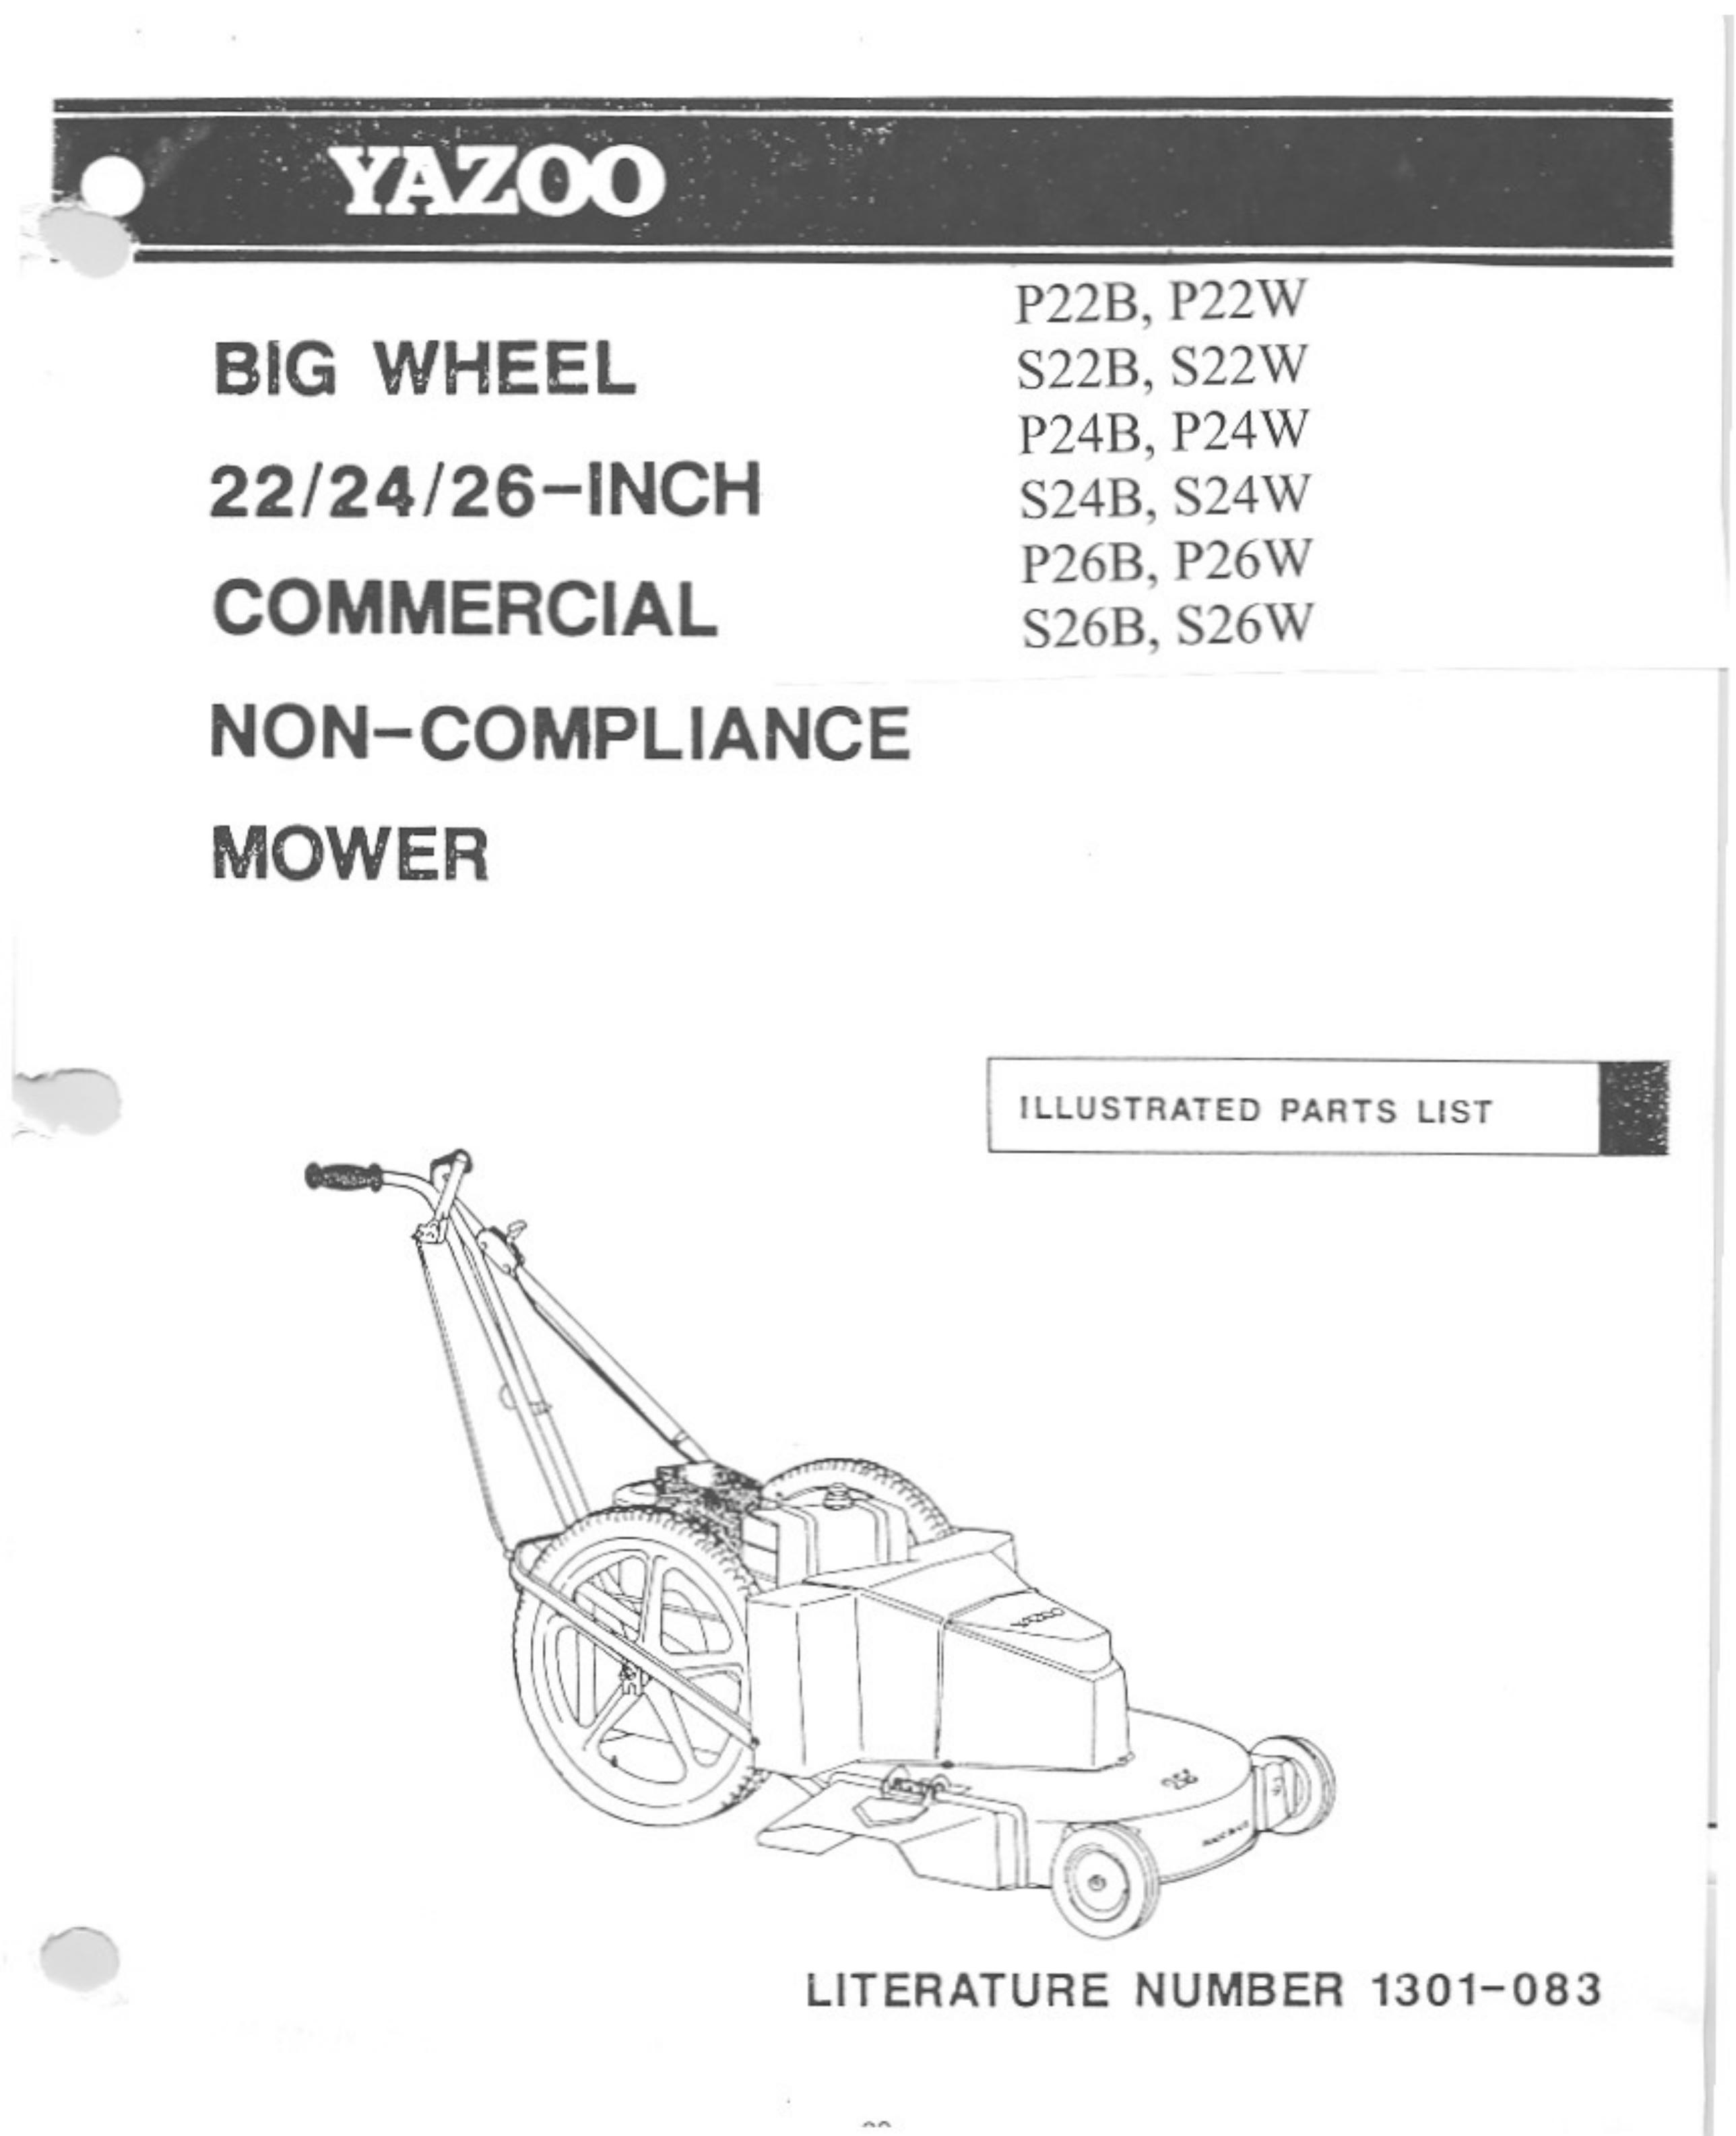 Yazoo/Kees P26B Lawn Mower User Manual